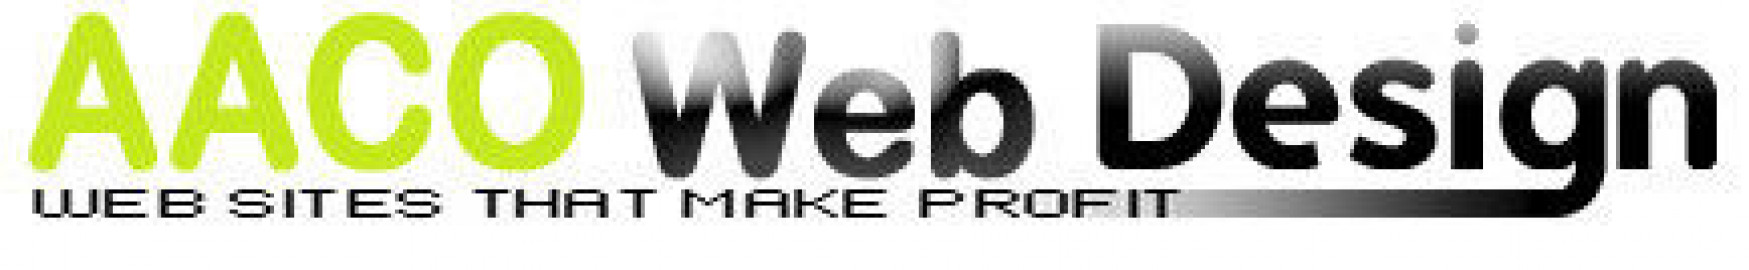 Visit AACO Web Design